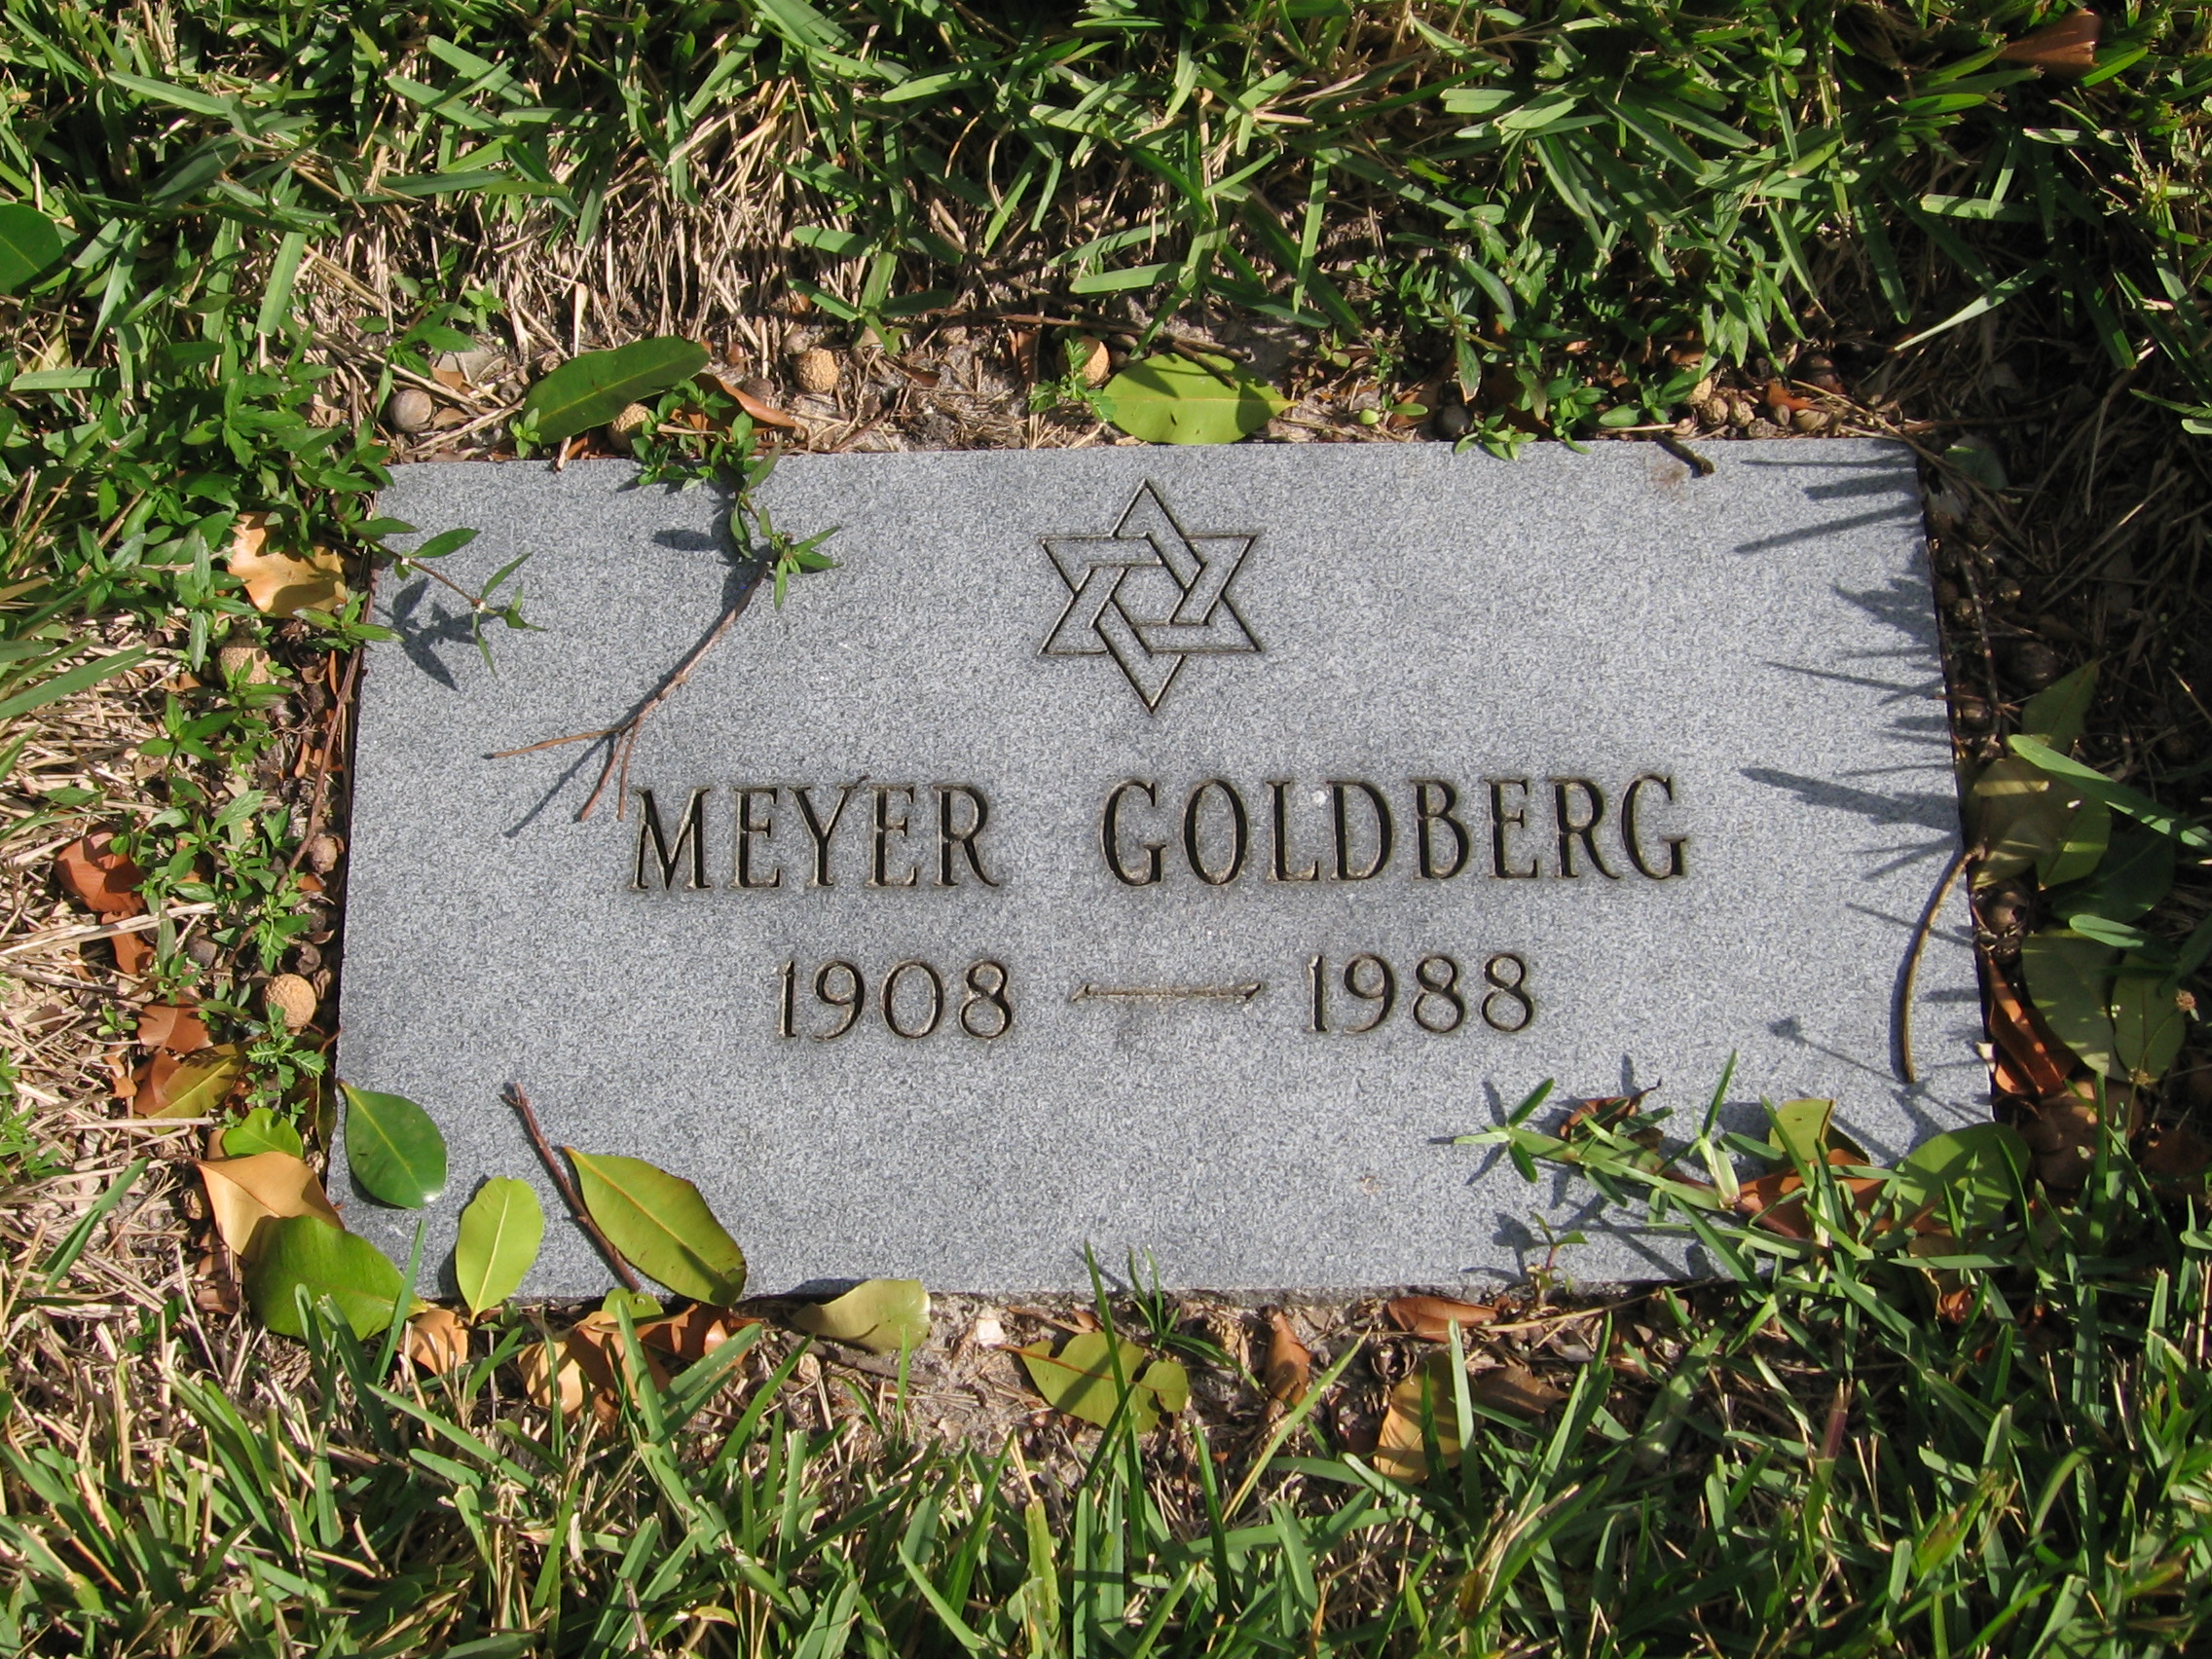 Meyer Goldberg